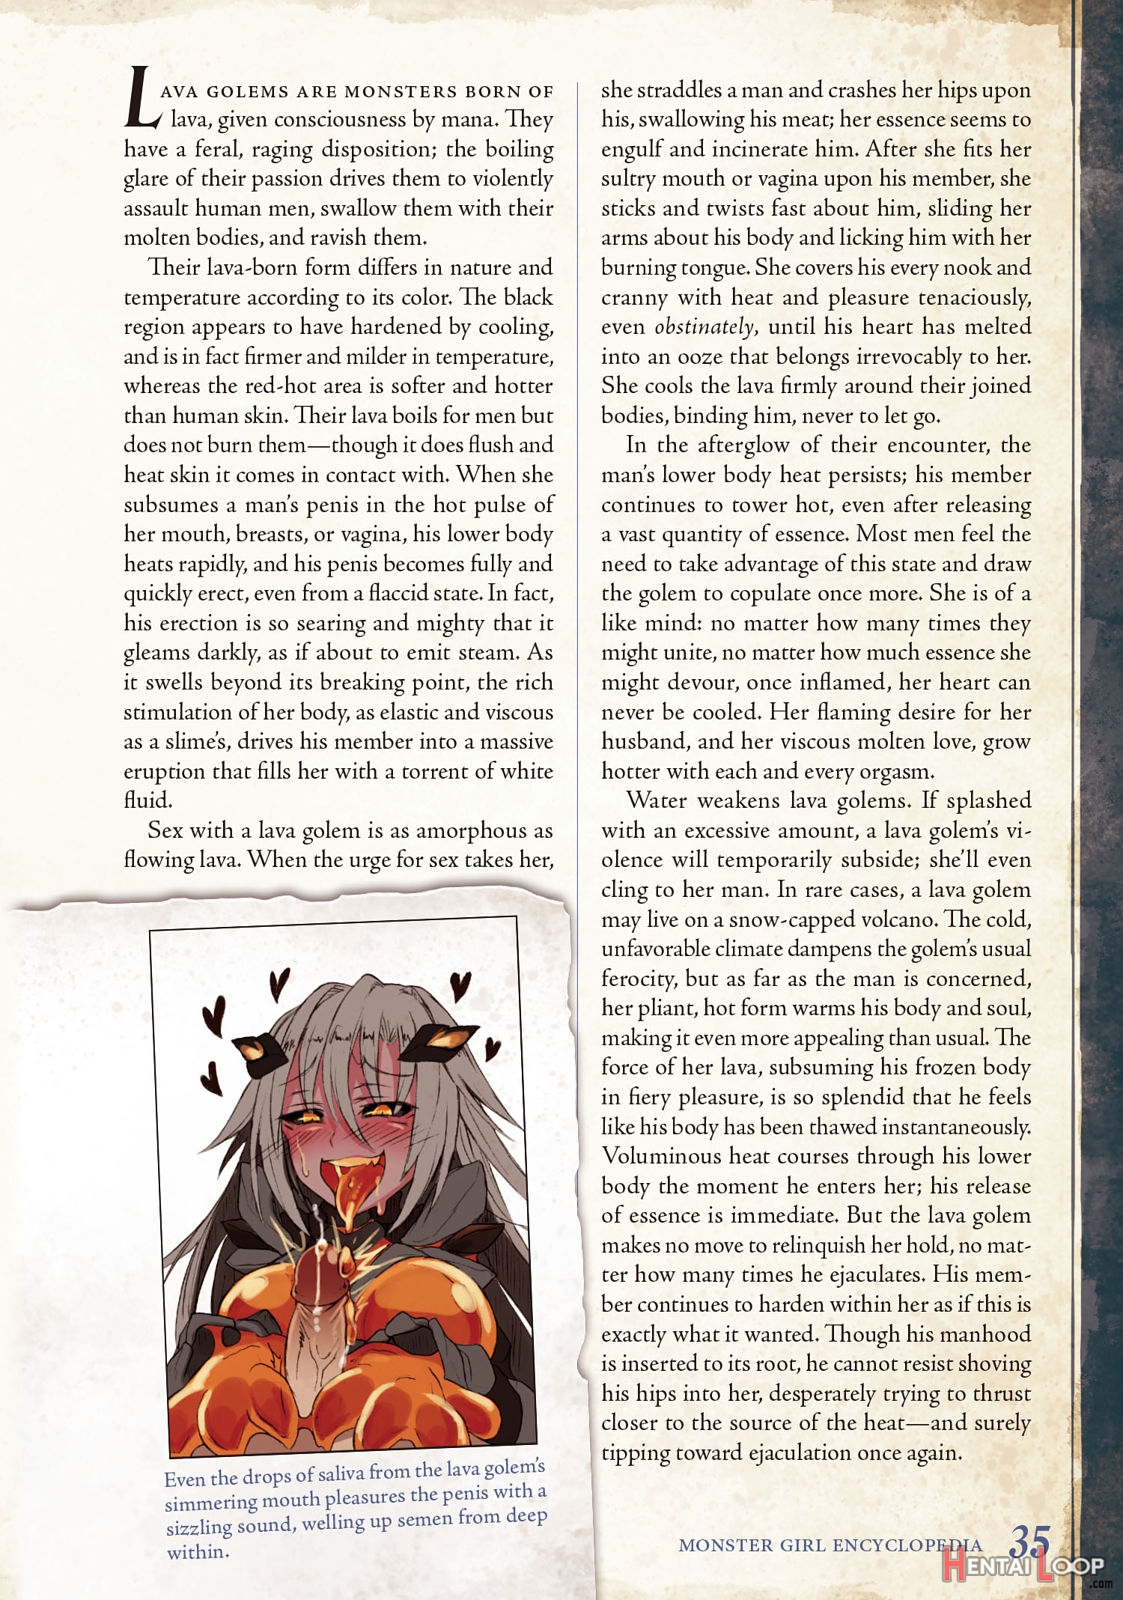 Monster Girl Encyclopedia Vol. 2 page 36